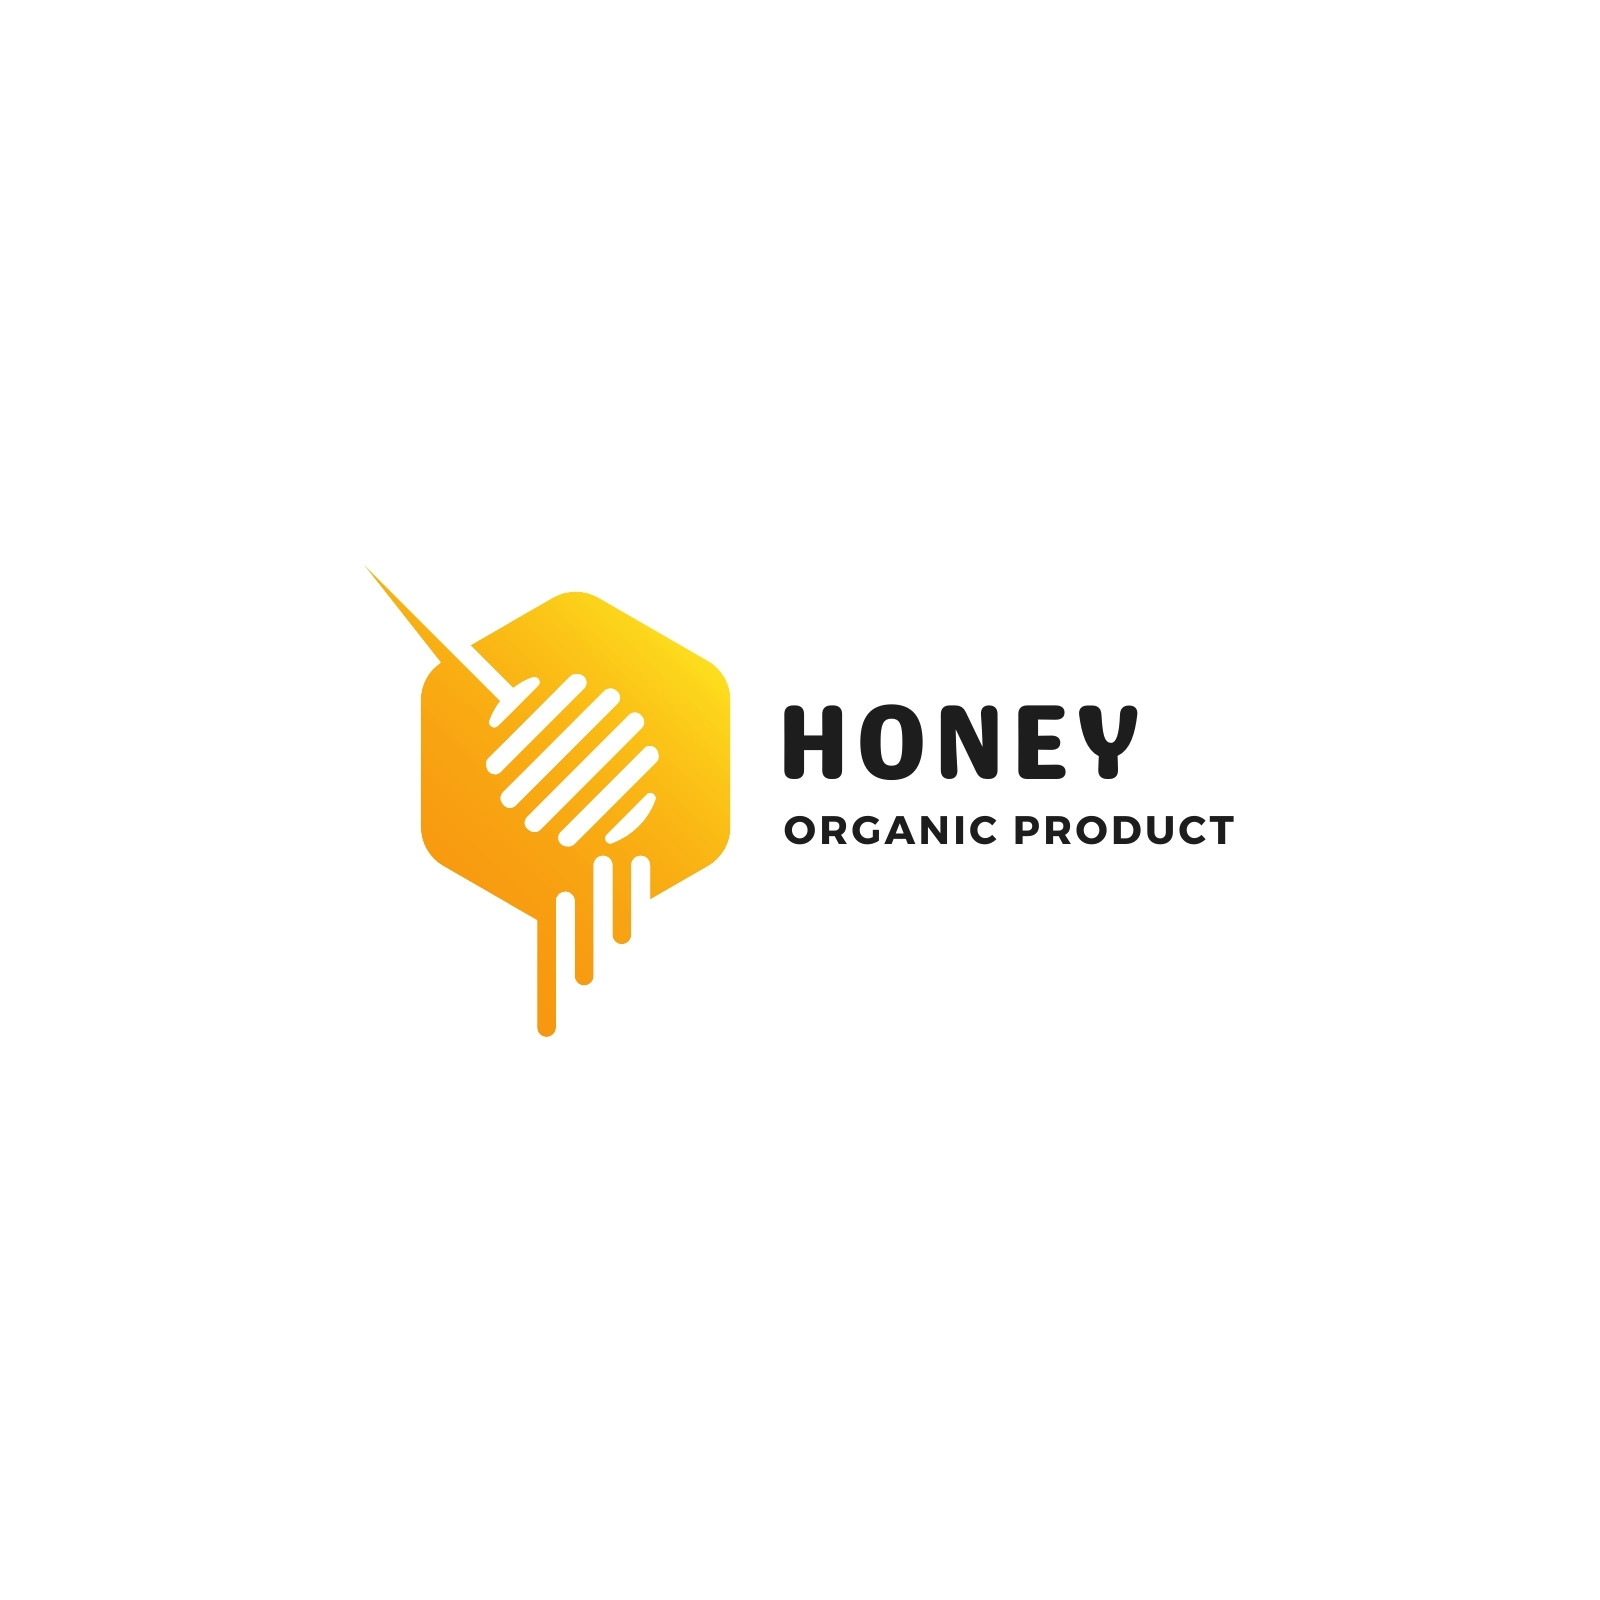 Free honey logo - Vector Art